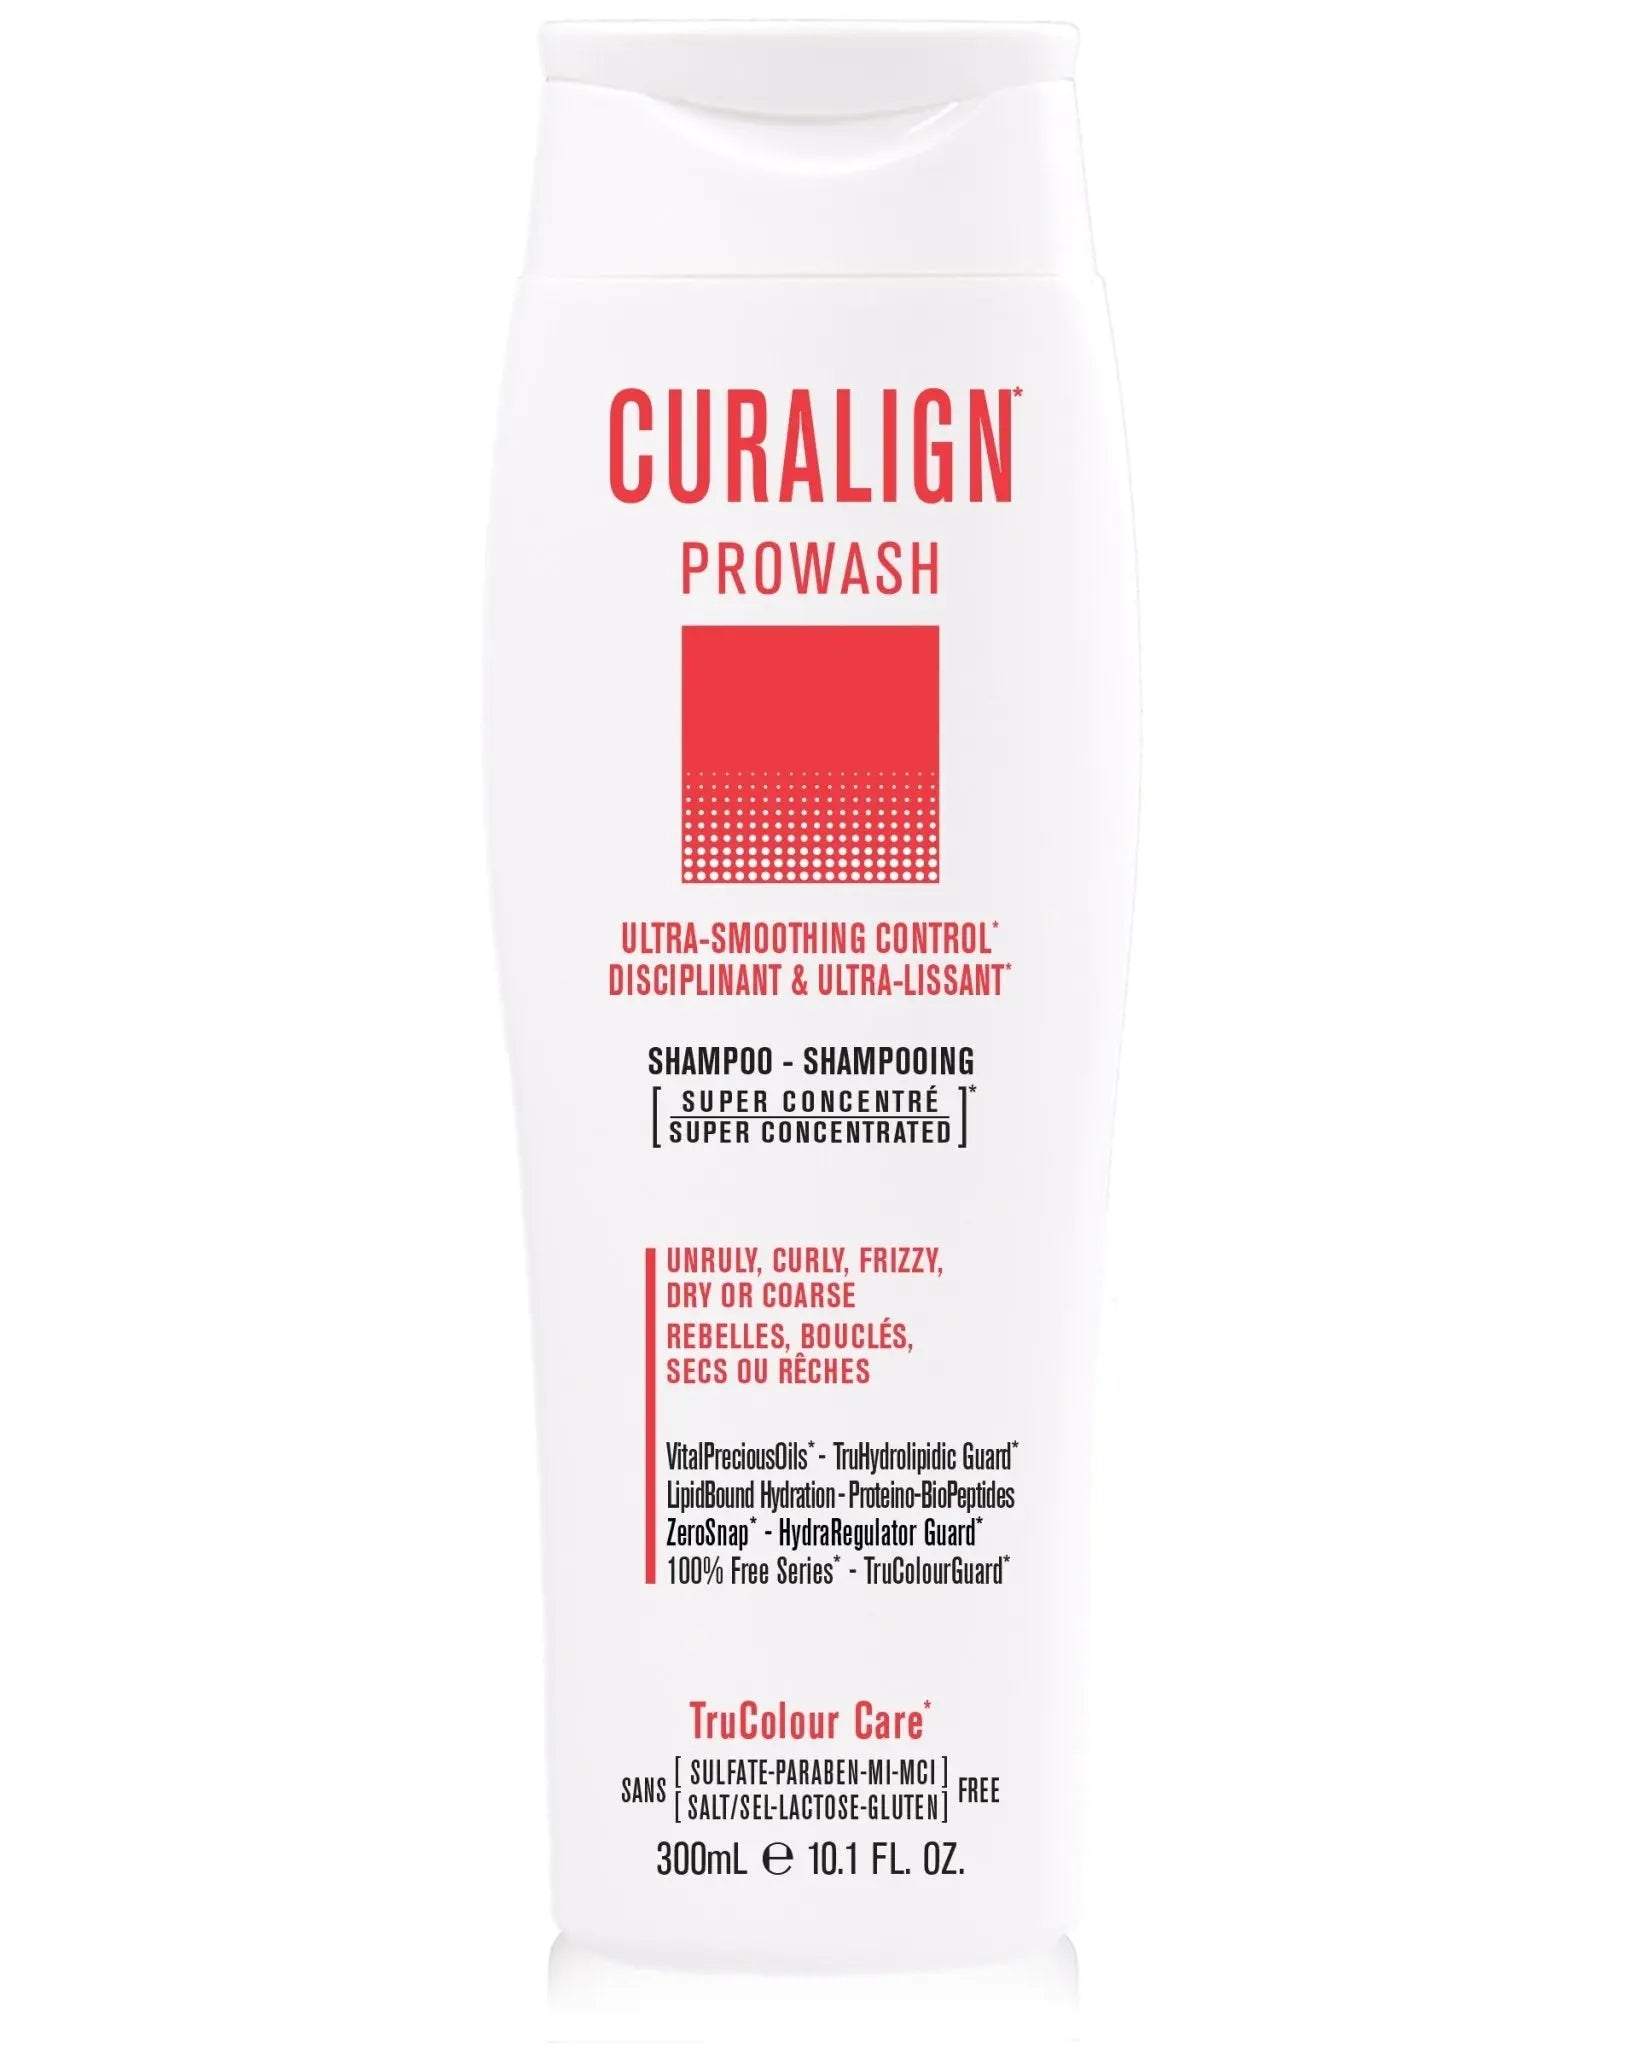 CURALIGN Prowash (shampoo) 10.1 FL. OZ. - SNOBGIRLS.com